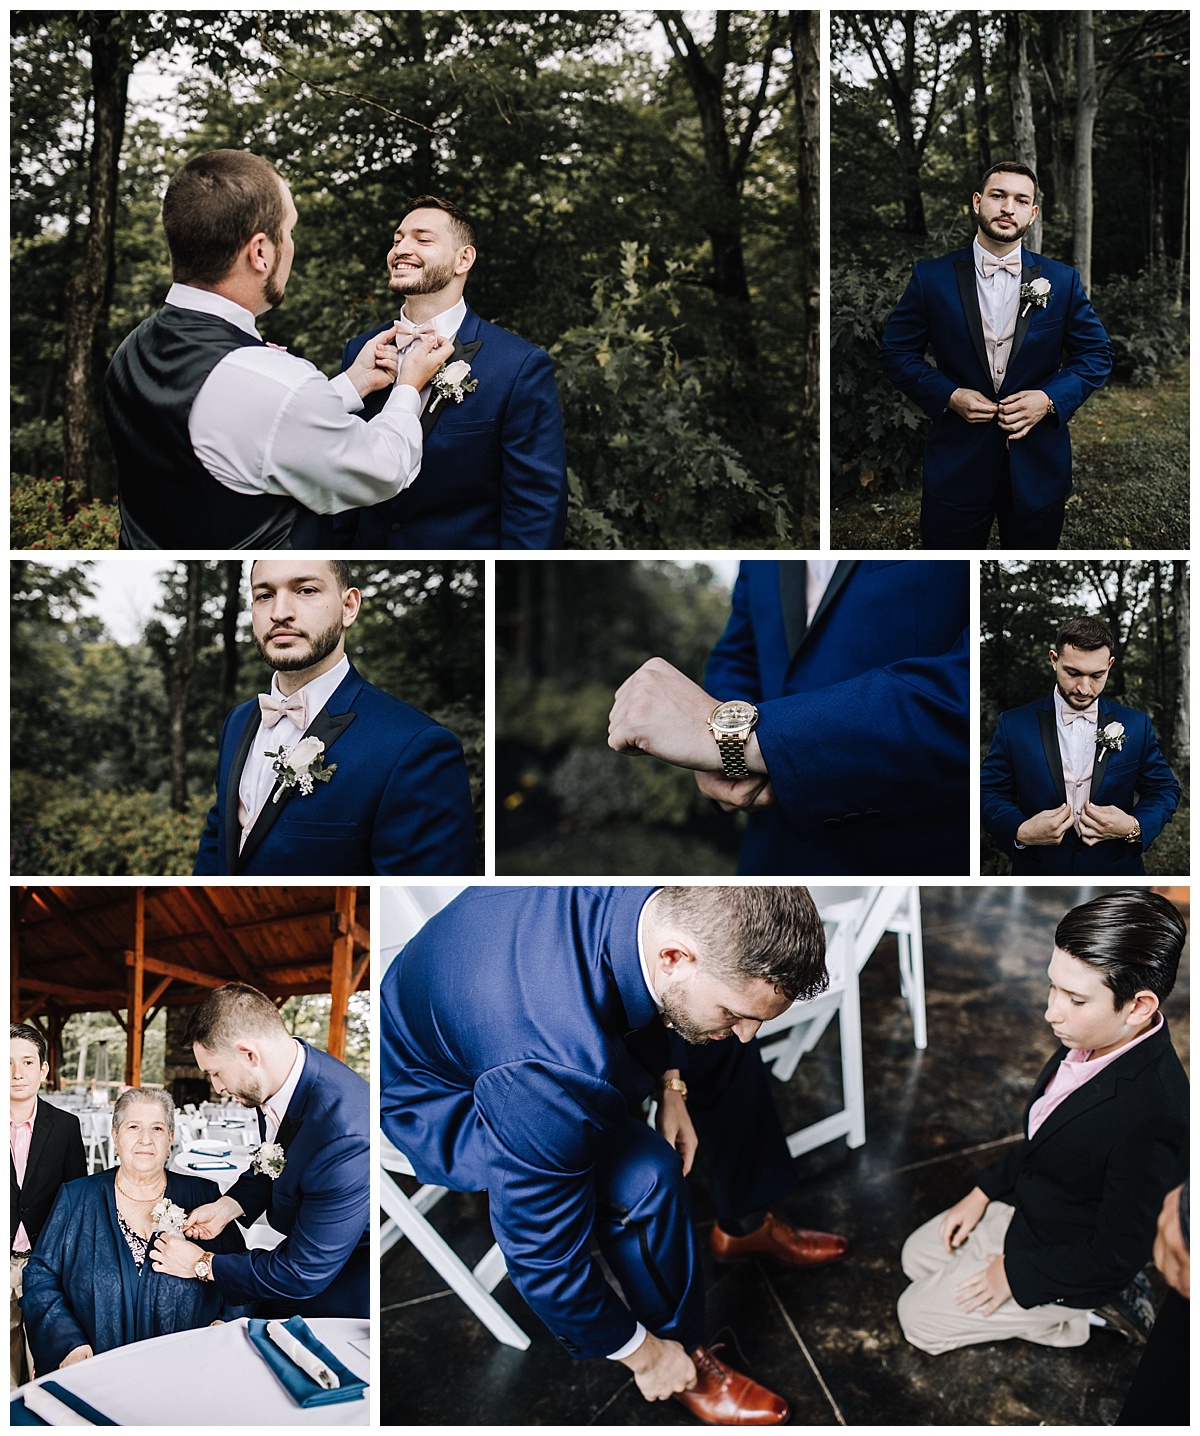 Mr. & Mrs. Tortora - Meadow Ridge Events - Northeast Ohio Wedding Photographer